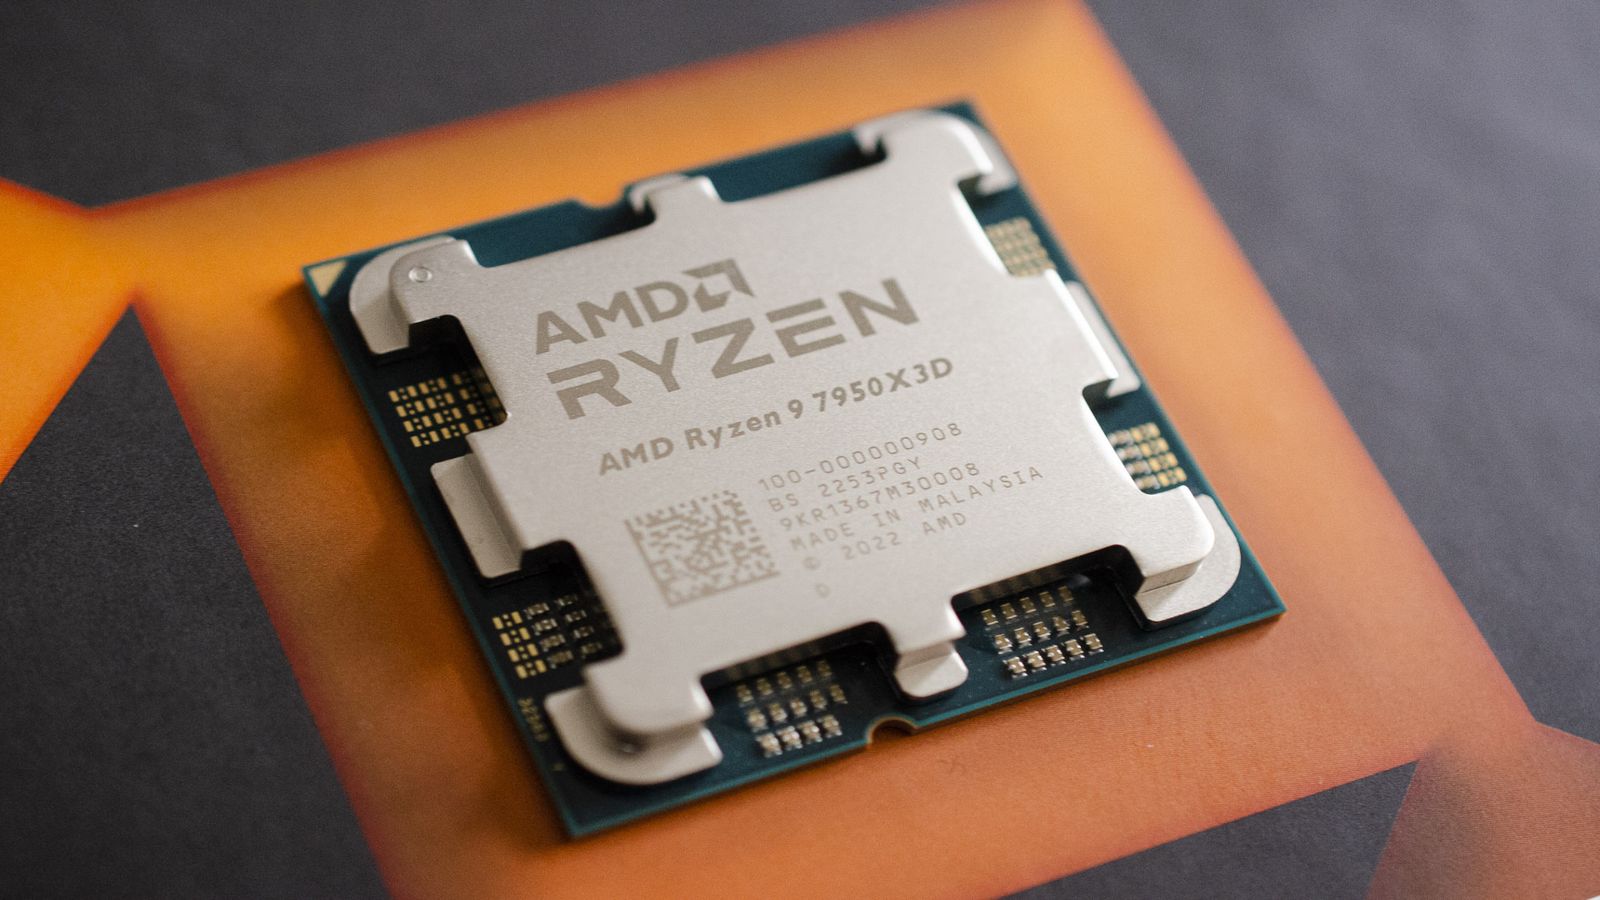 AMD Ryzen 9 7950x3D